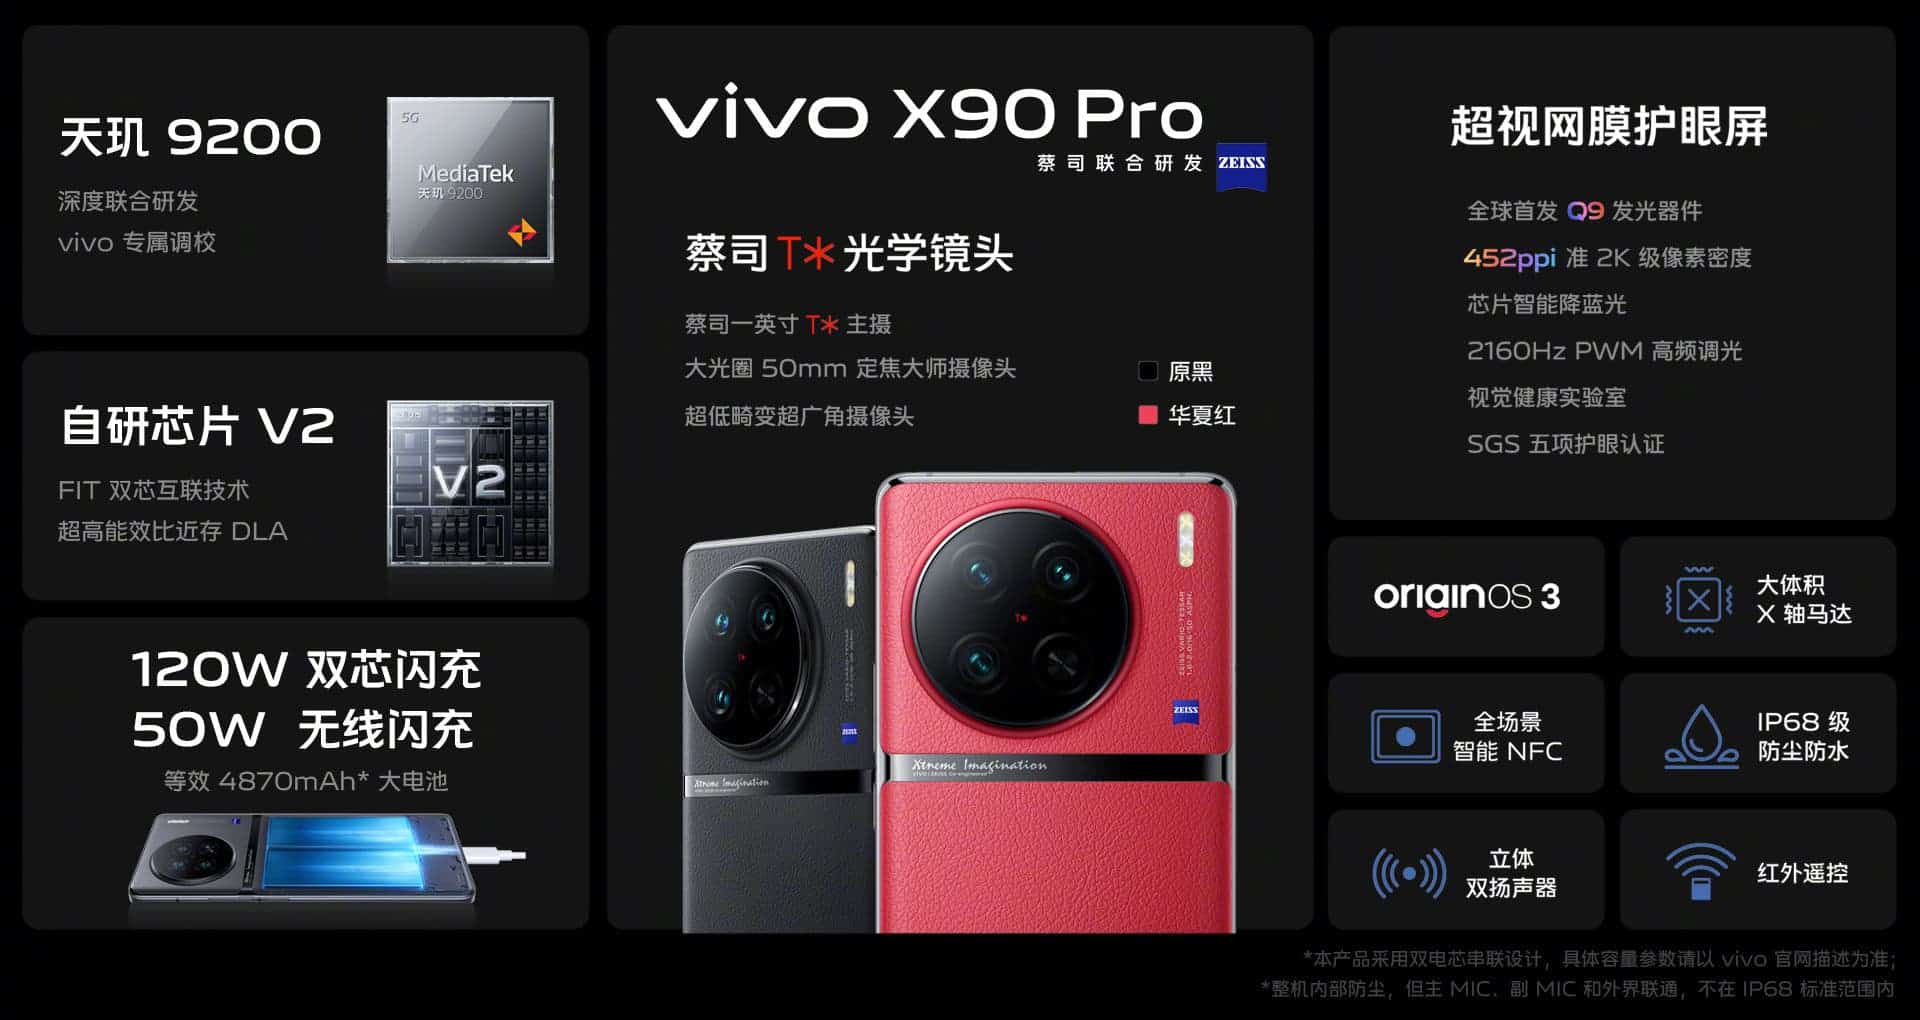 VIVO X90 Pro specs